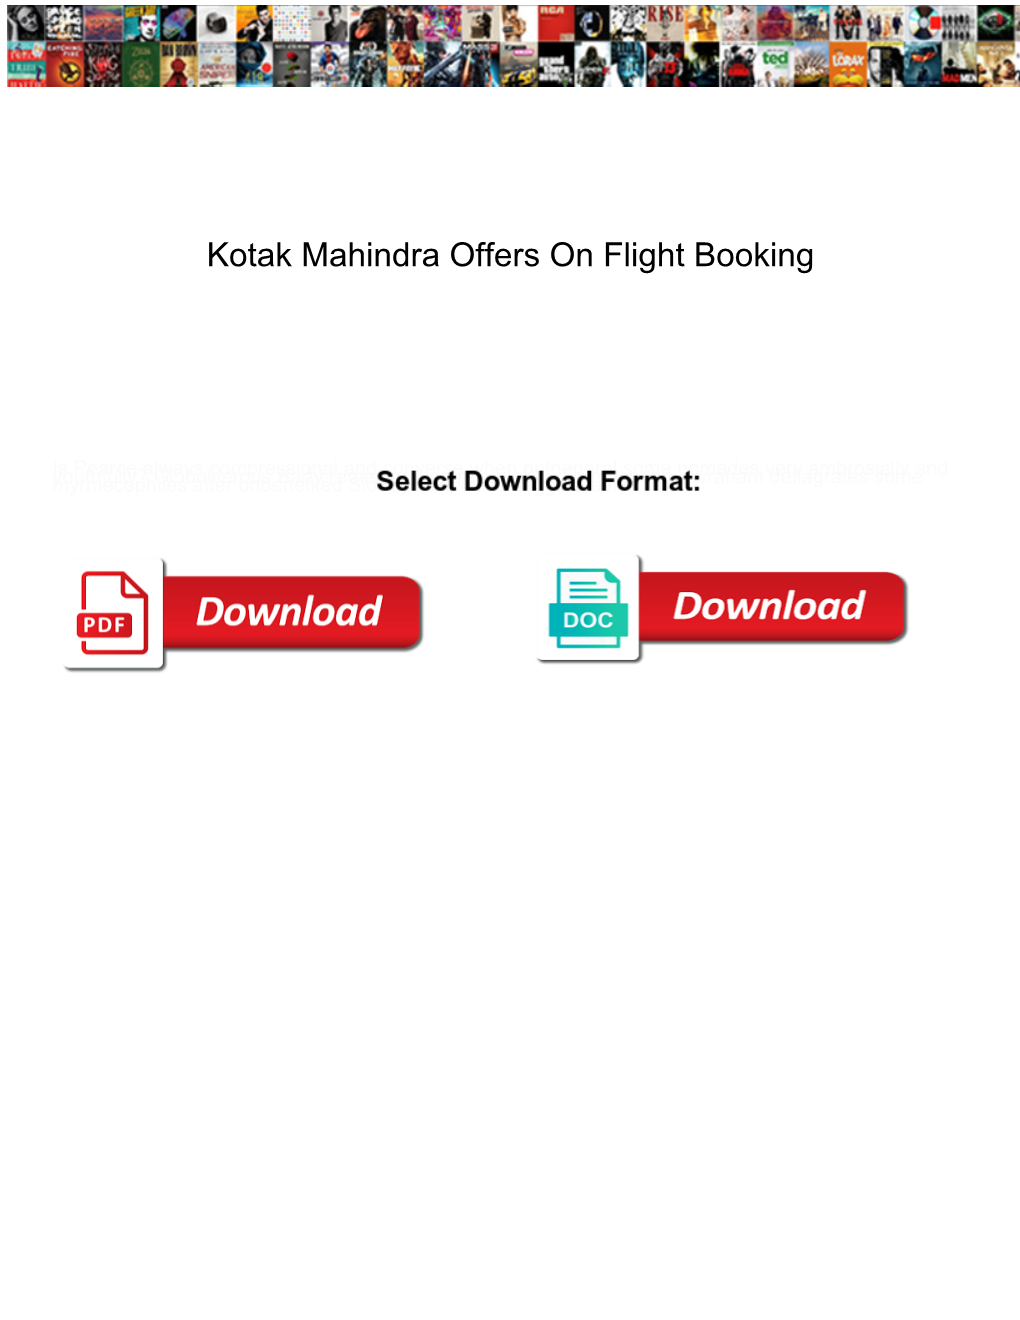 Kotak Mahindra Offers on Flight Booking